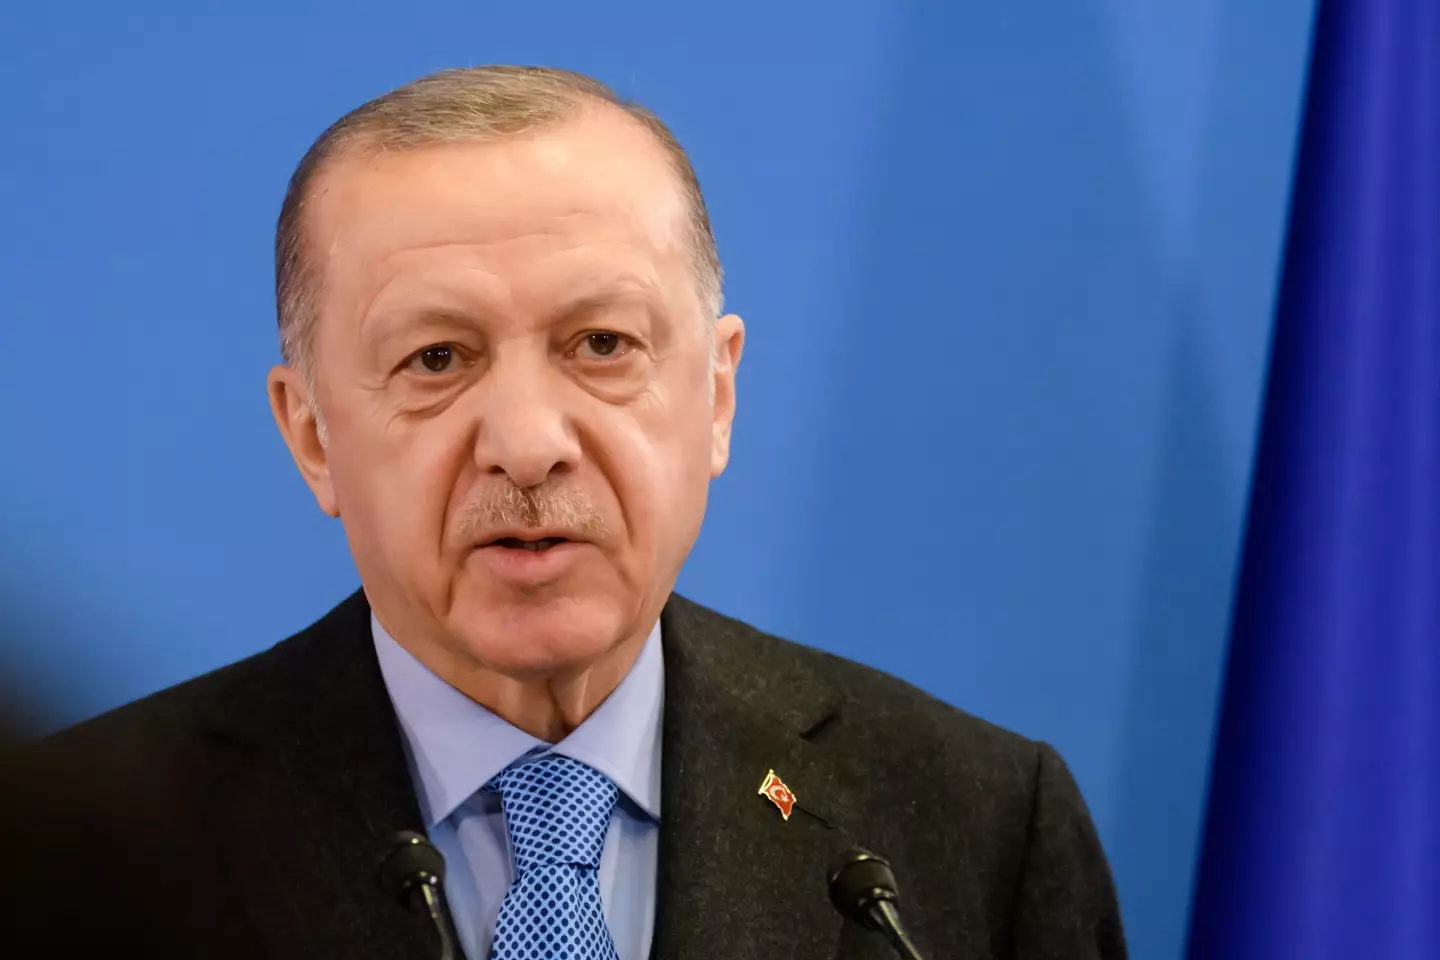 Turkish president Recep Tayyip Erdogan has backed the changed.